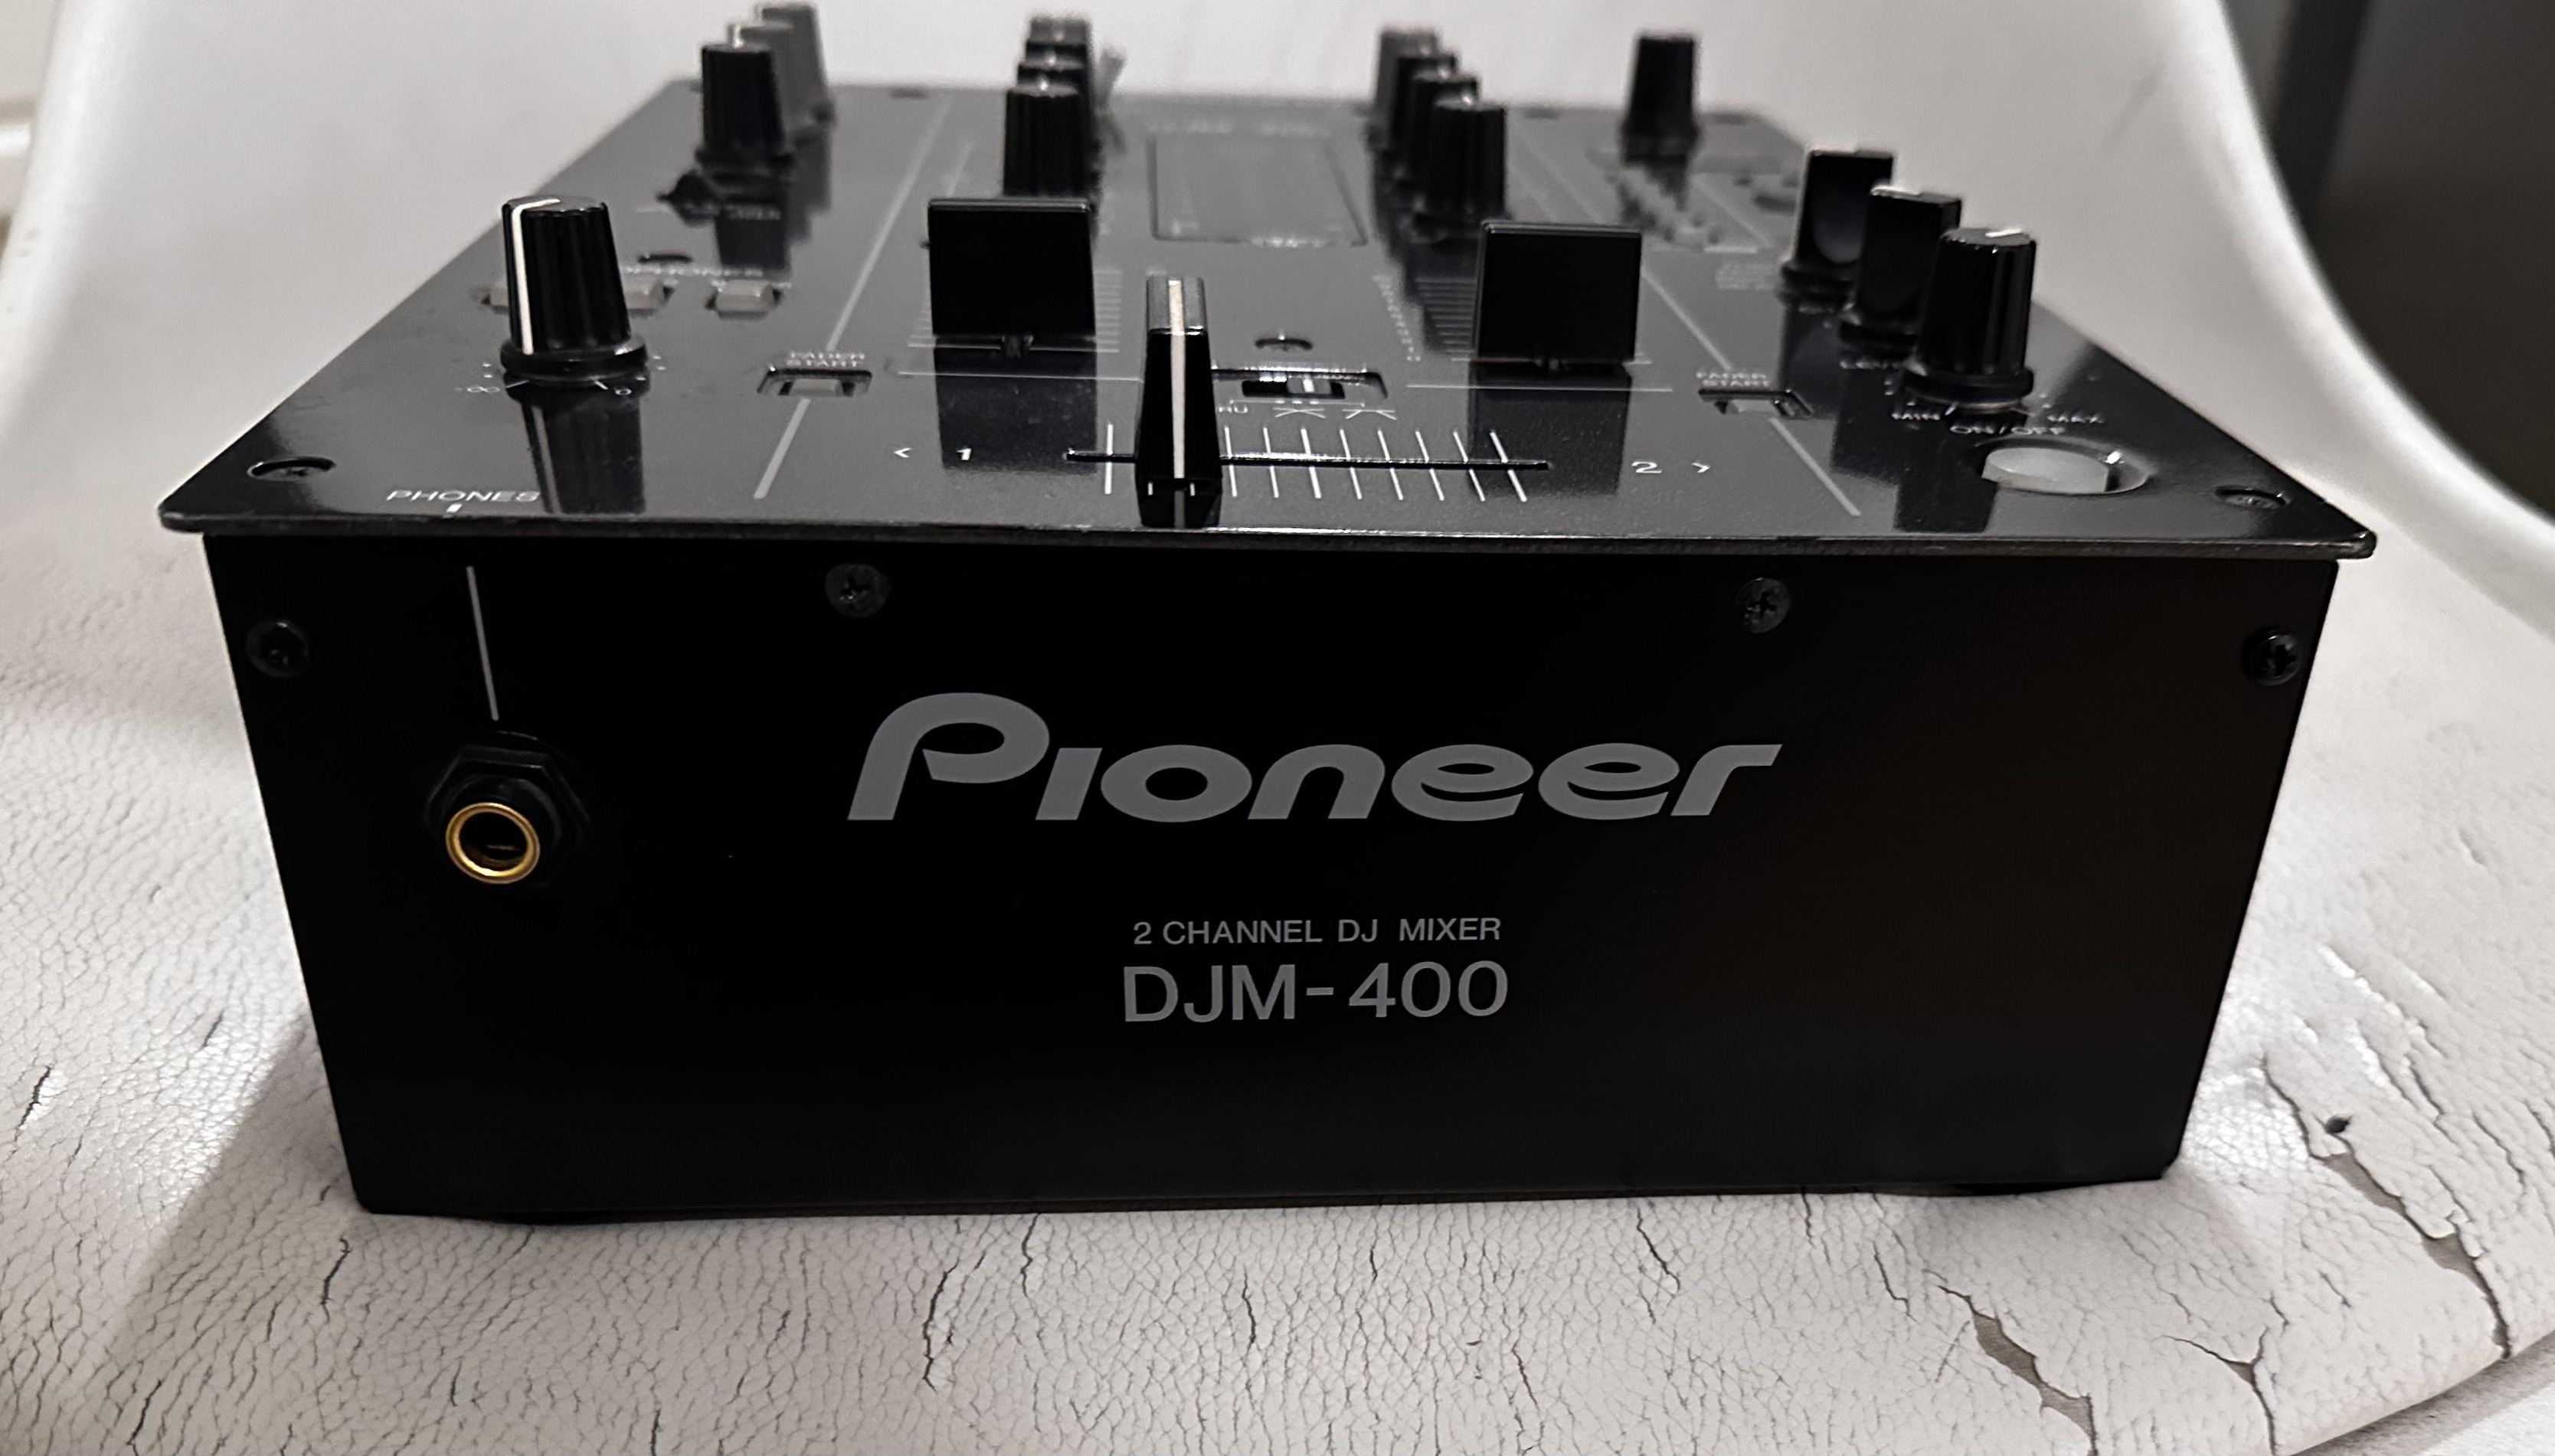 DJM-400　Pioneer　DJM-400　Audiofanzine